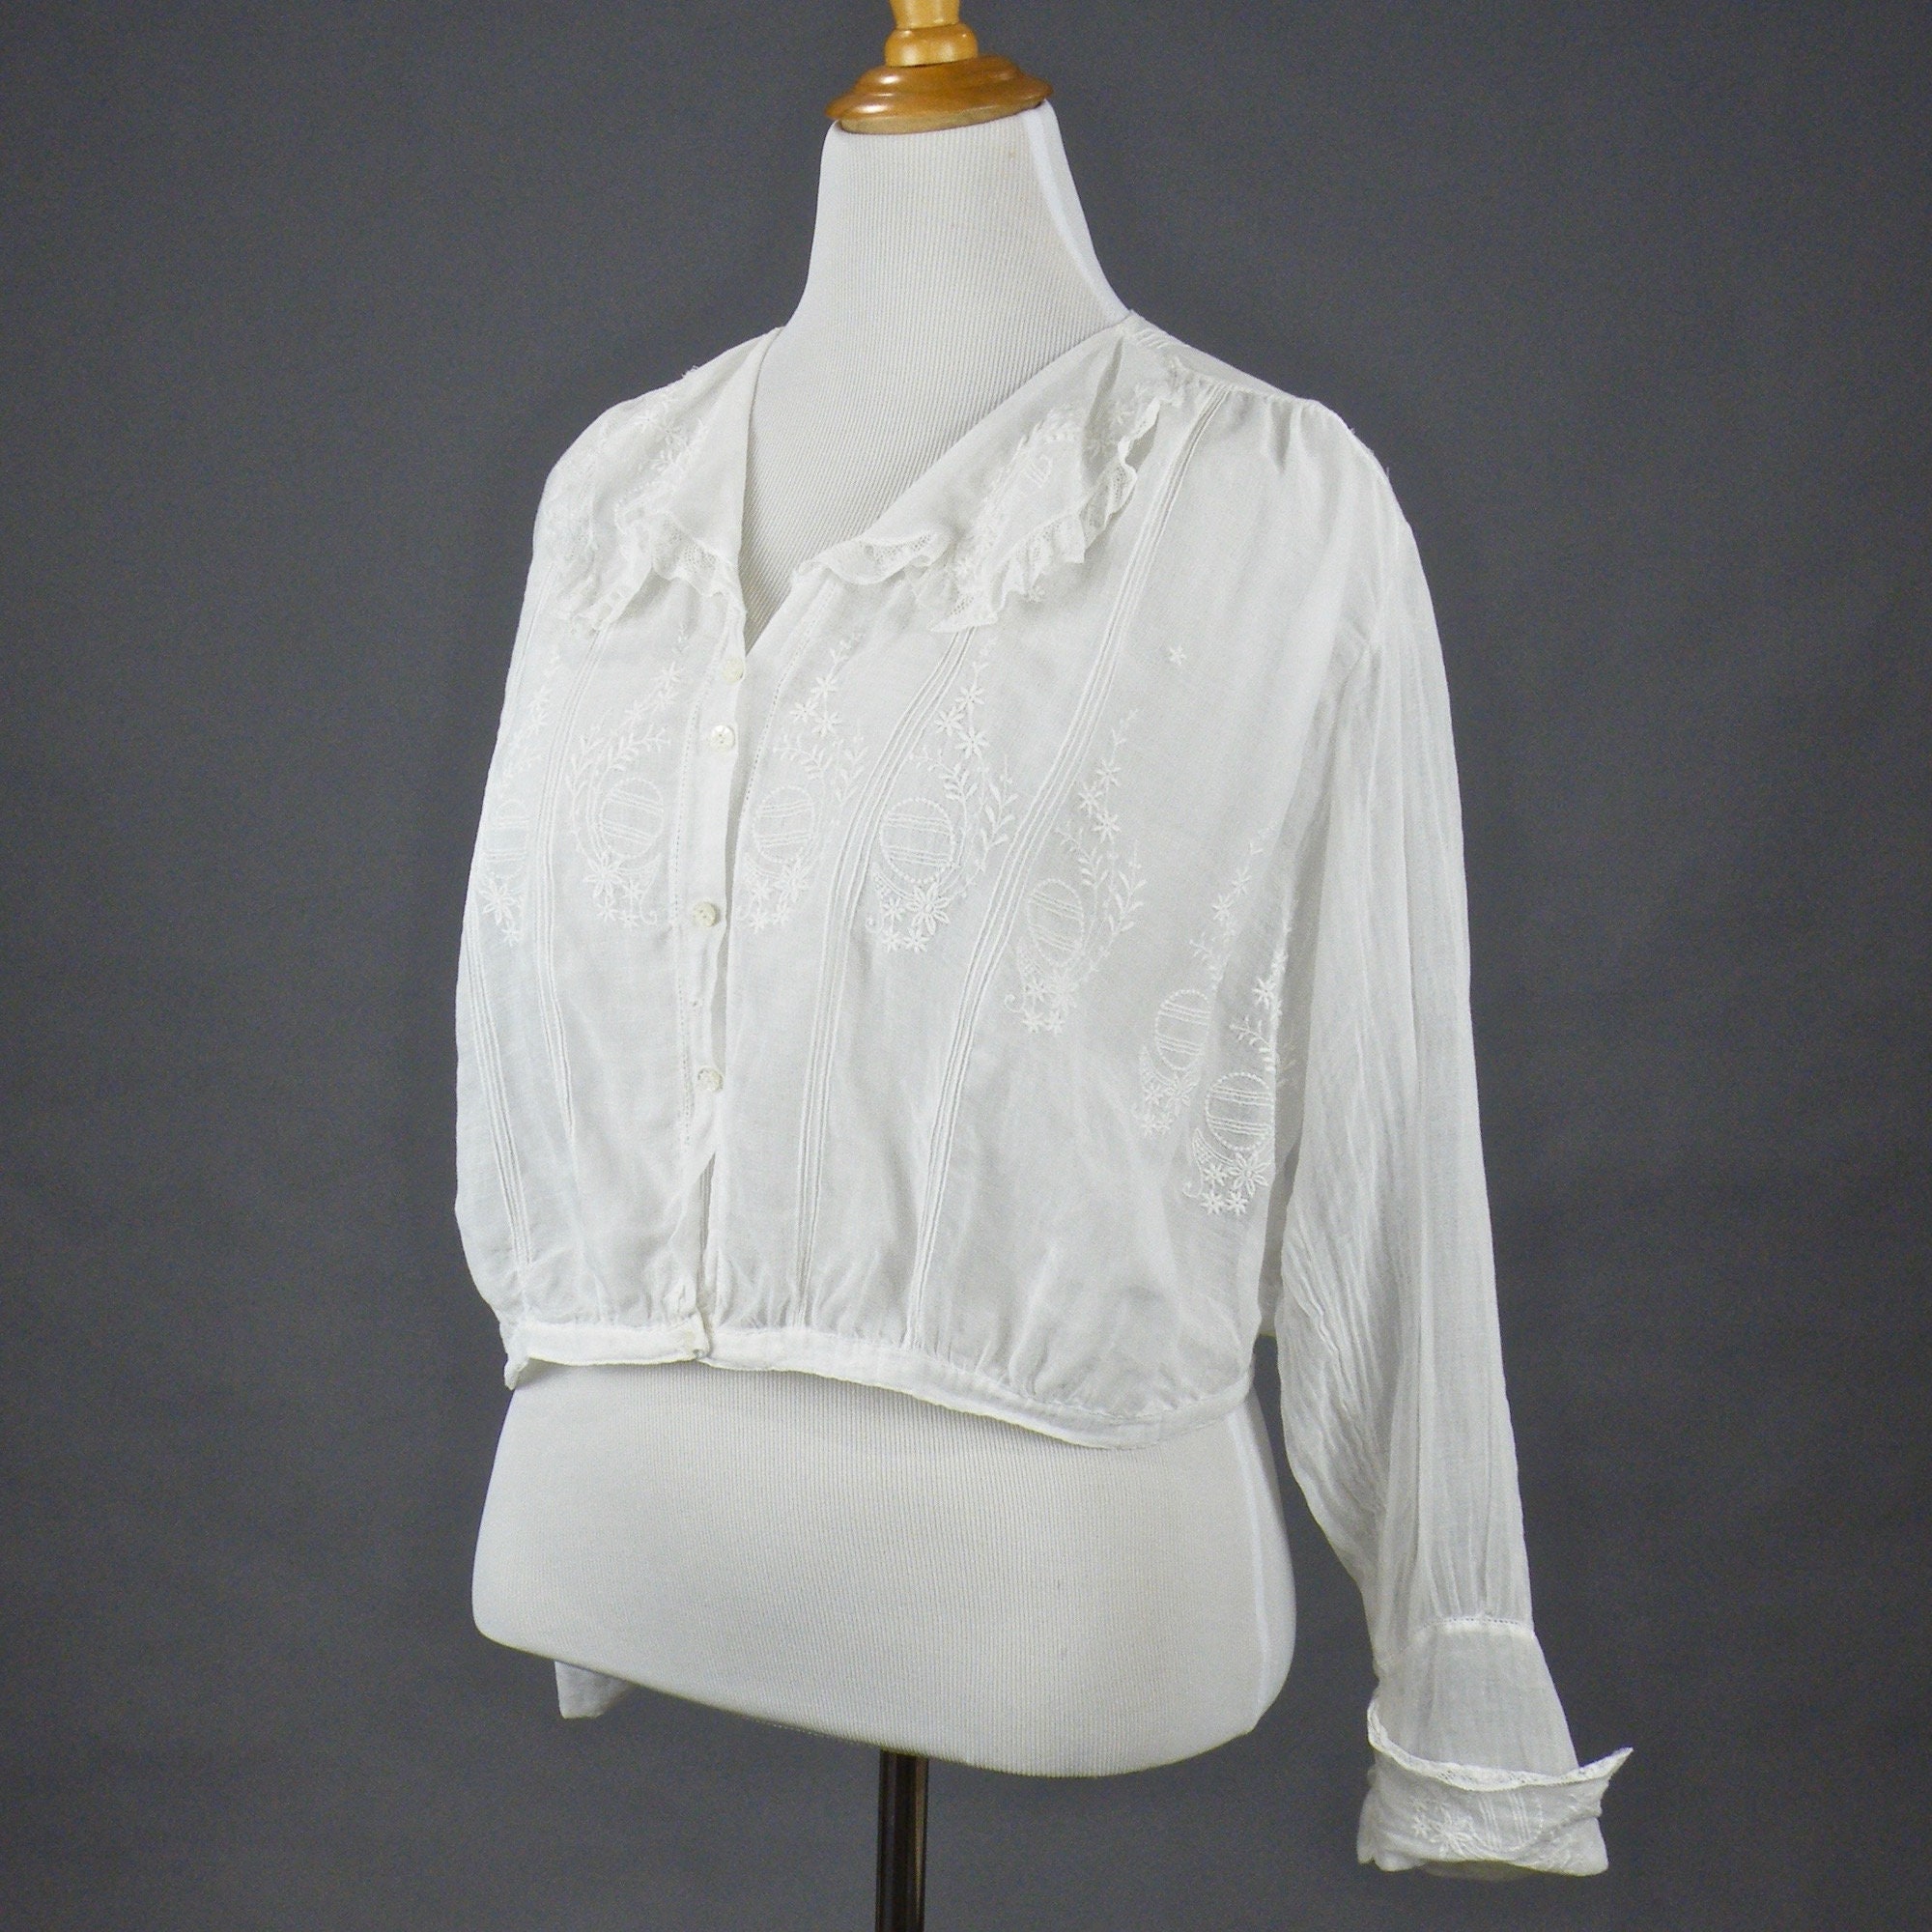 Antique 1910s 20s Embroidered White Cotton Lace Blouse, L - XL